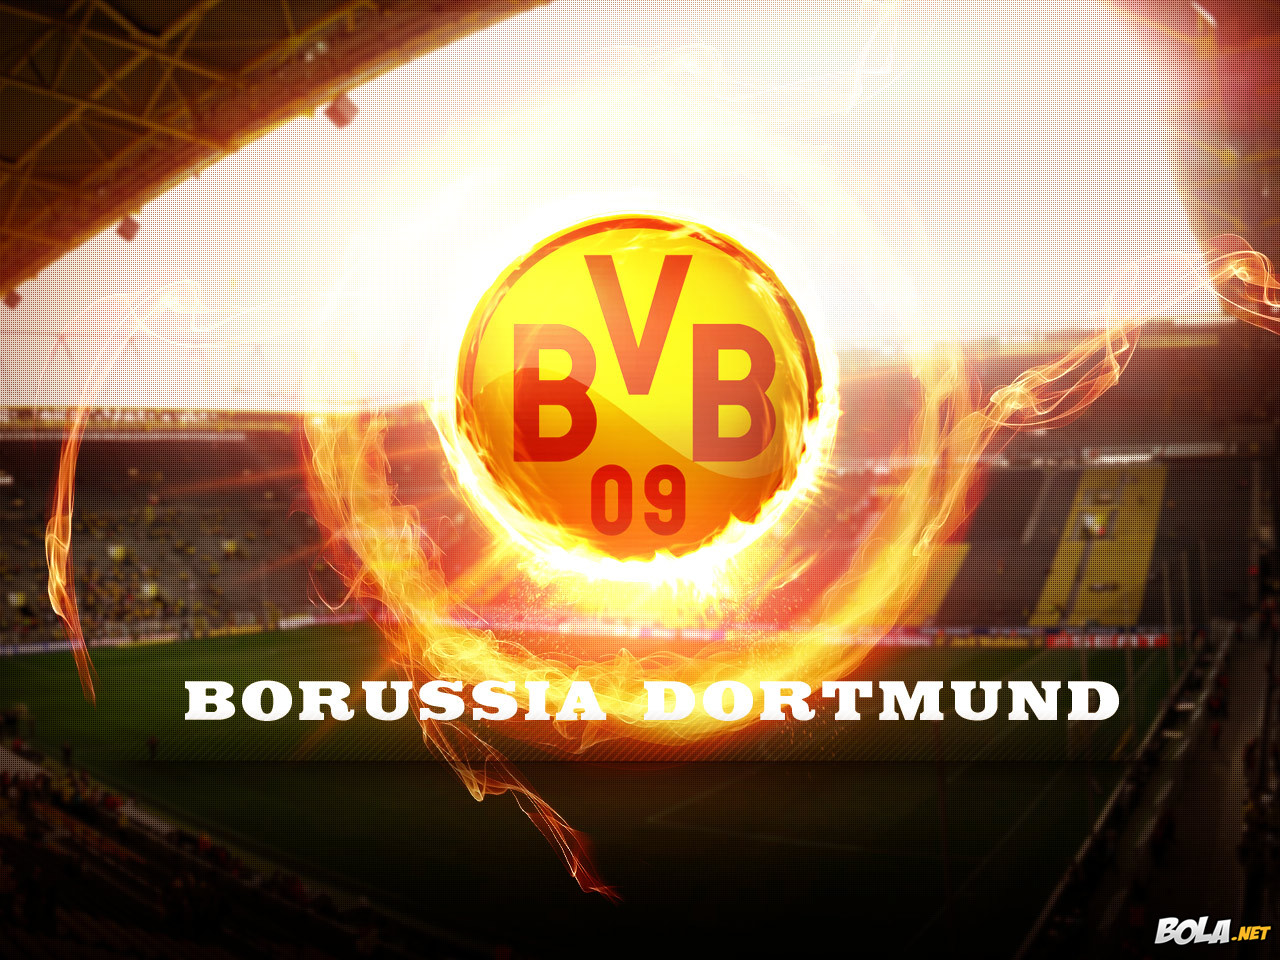 Deskripsi : Wallpaper Borussia Dortmund, size: 1280x960